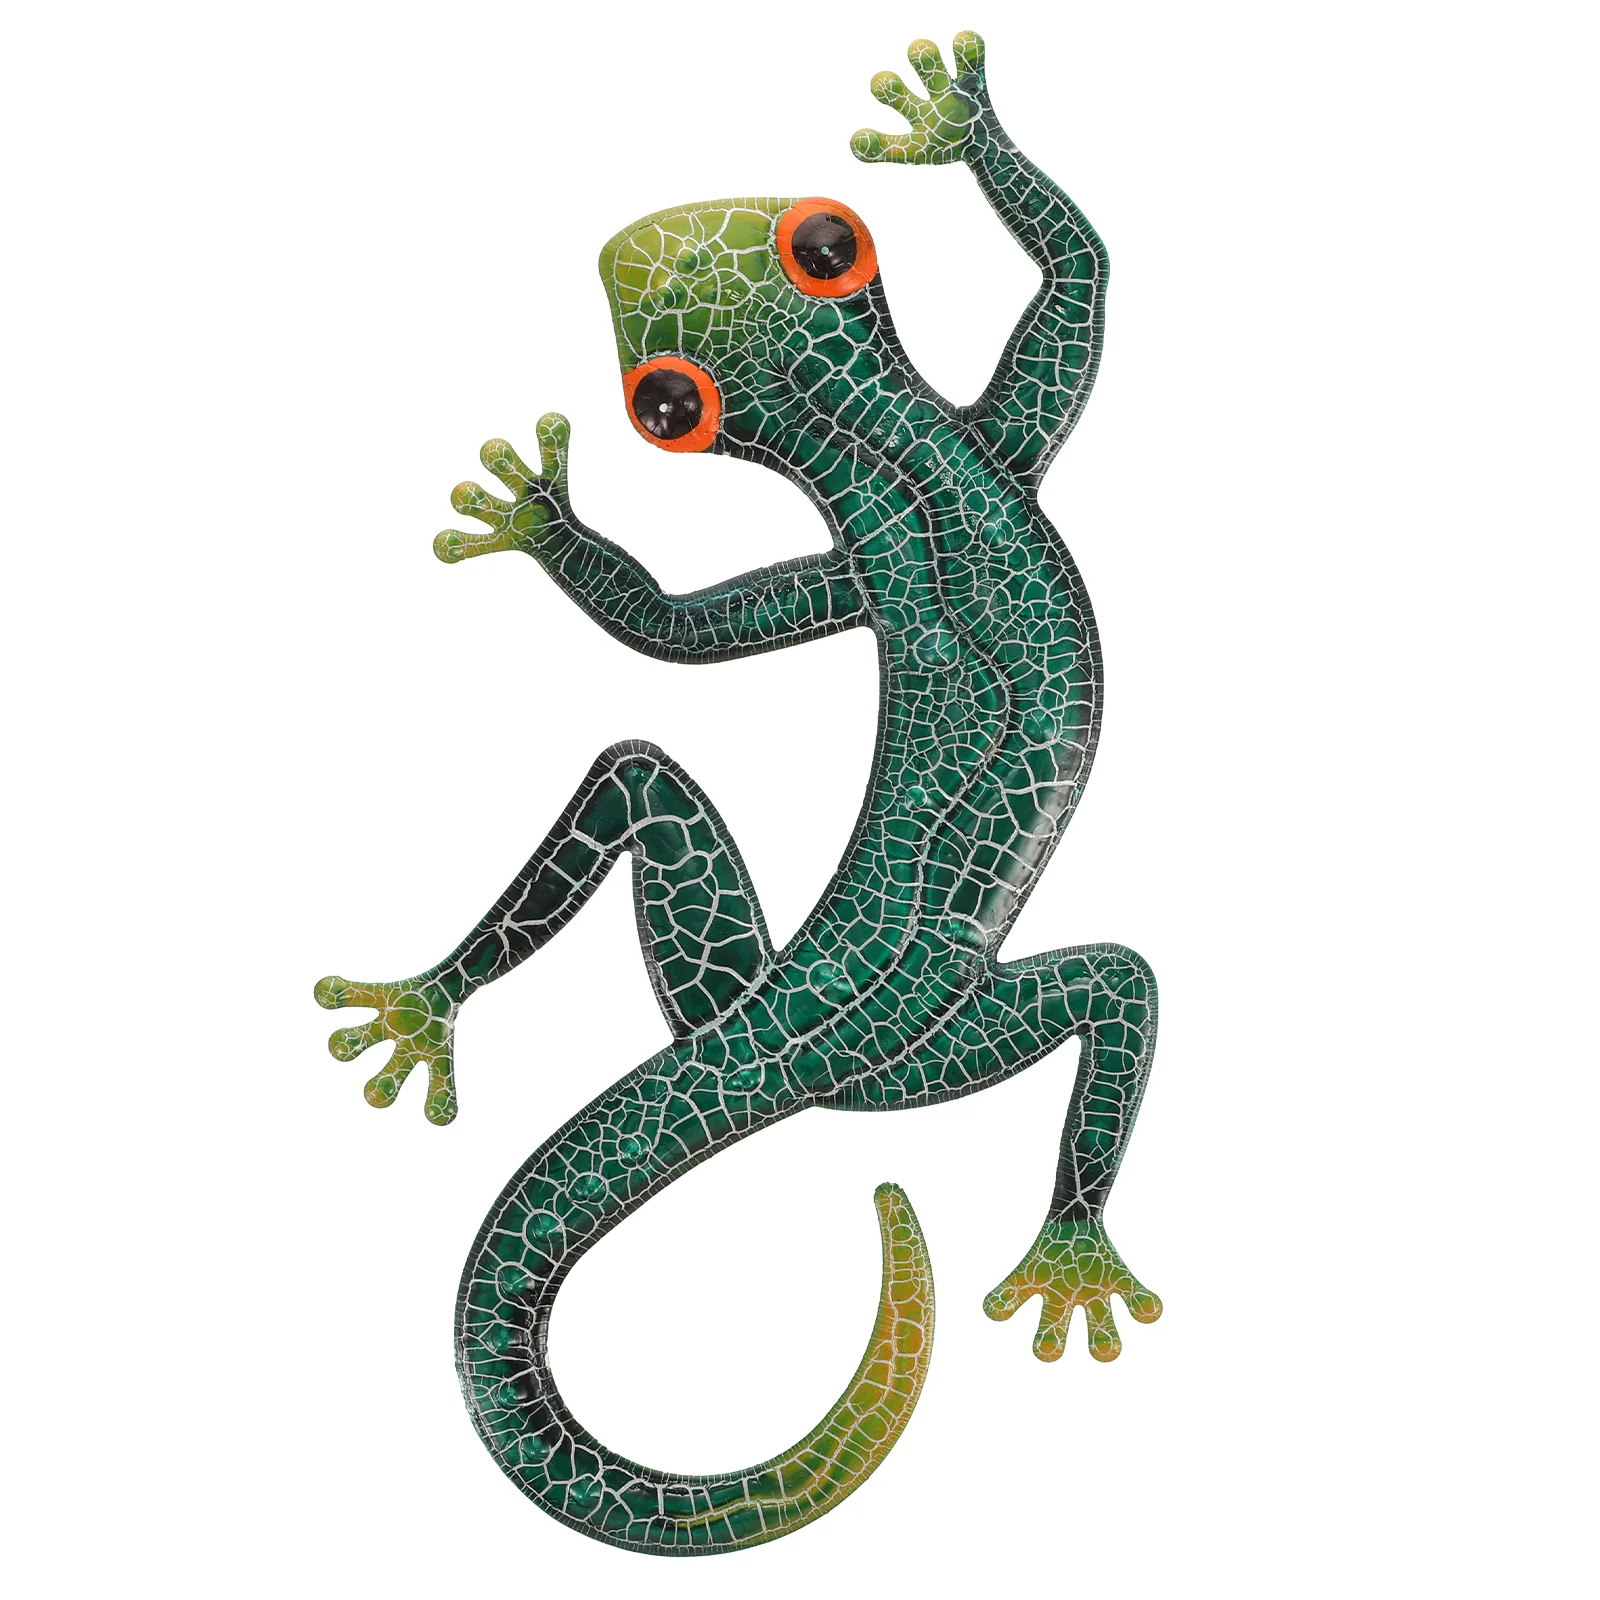 

Wall Metal Lizard Gecko Decor Outdoor Garden Iron Sculpture Decoration Animal Pendant Hangings Sculptures Yard Ornament